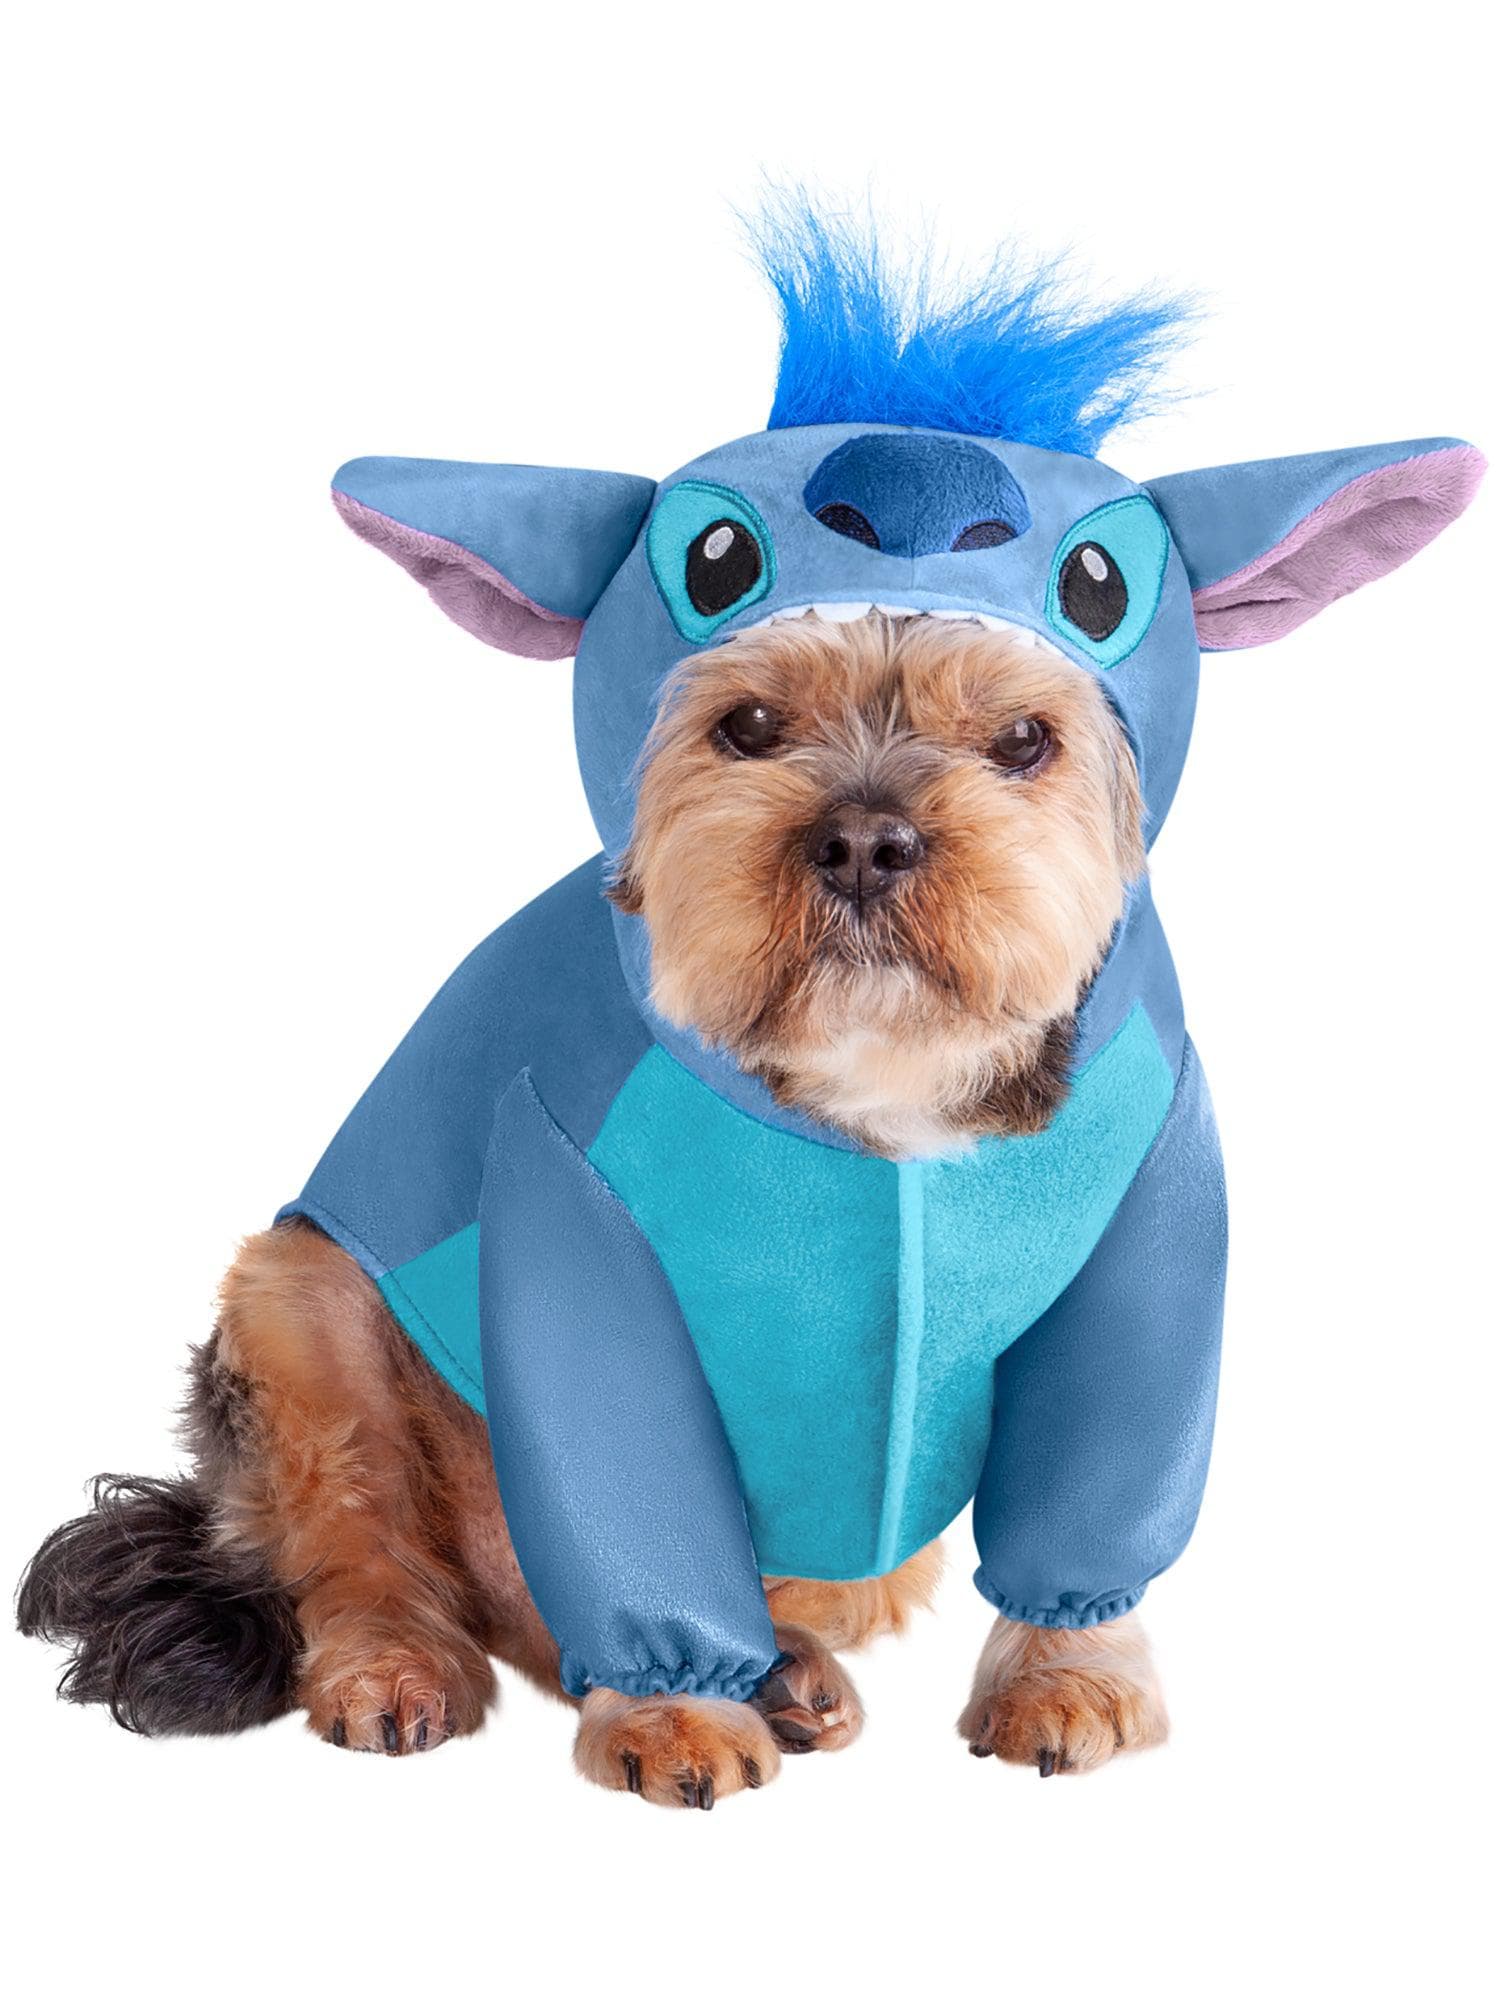 Lilo and Stitch - Stitch Pet Costume - costumes.com